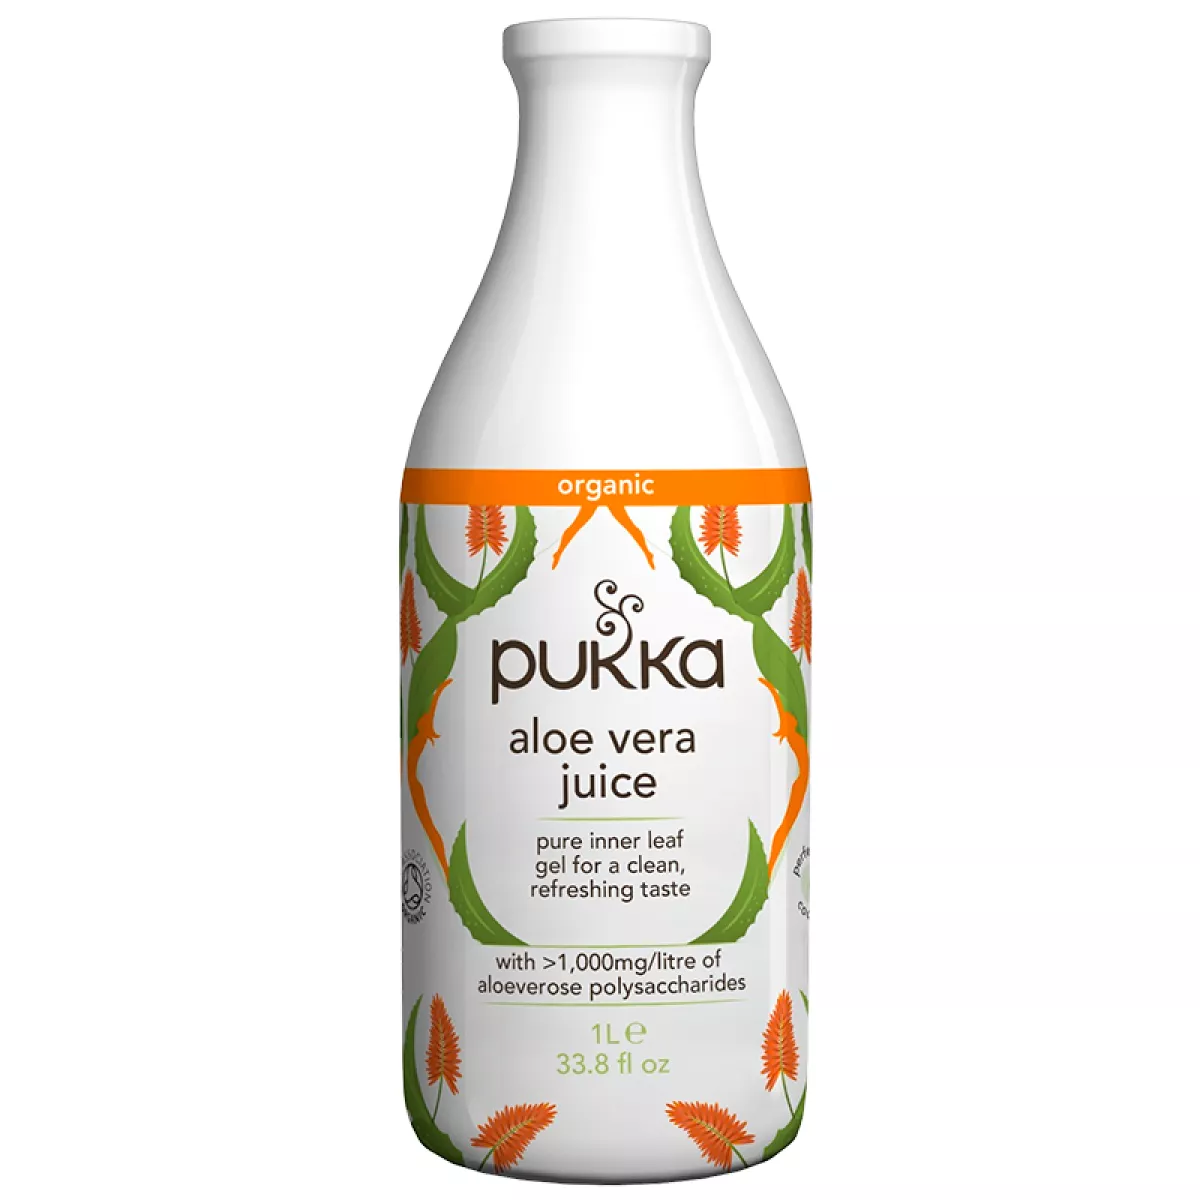 #3 - Aloe vera juice Økologisk 1 ltr fra Pukka